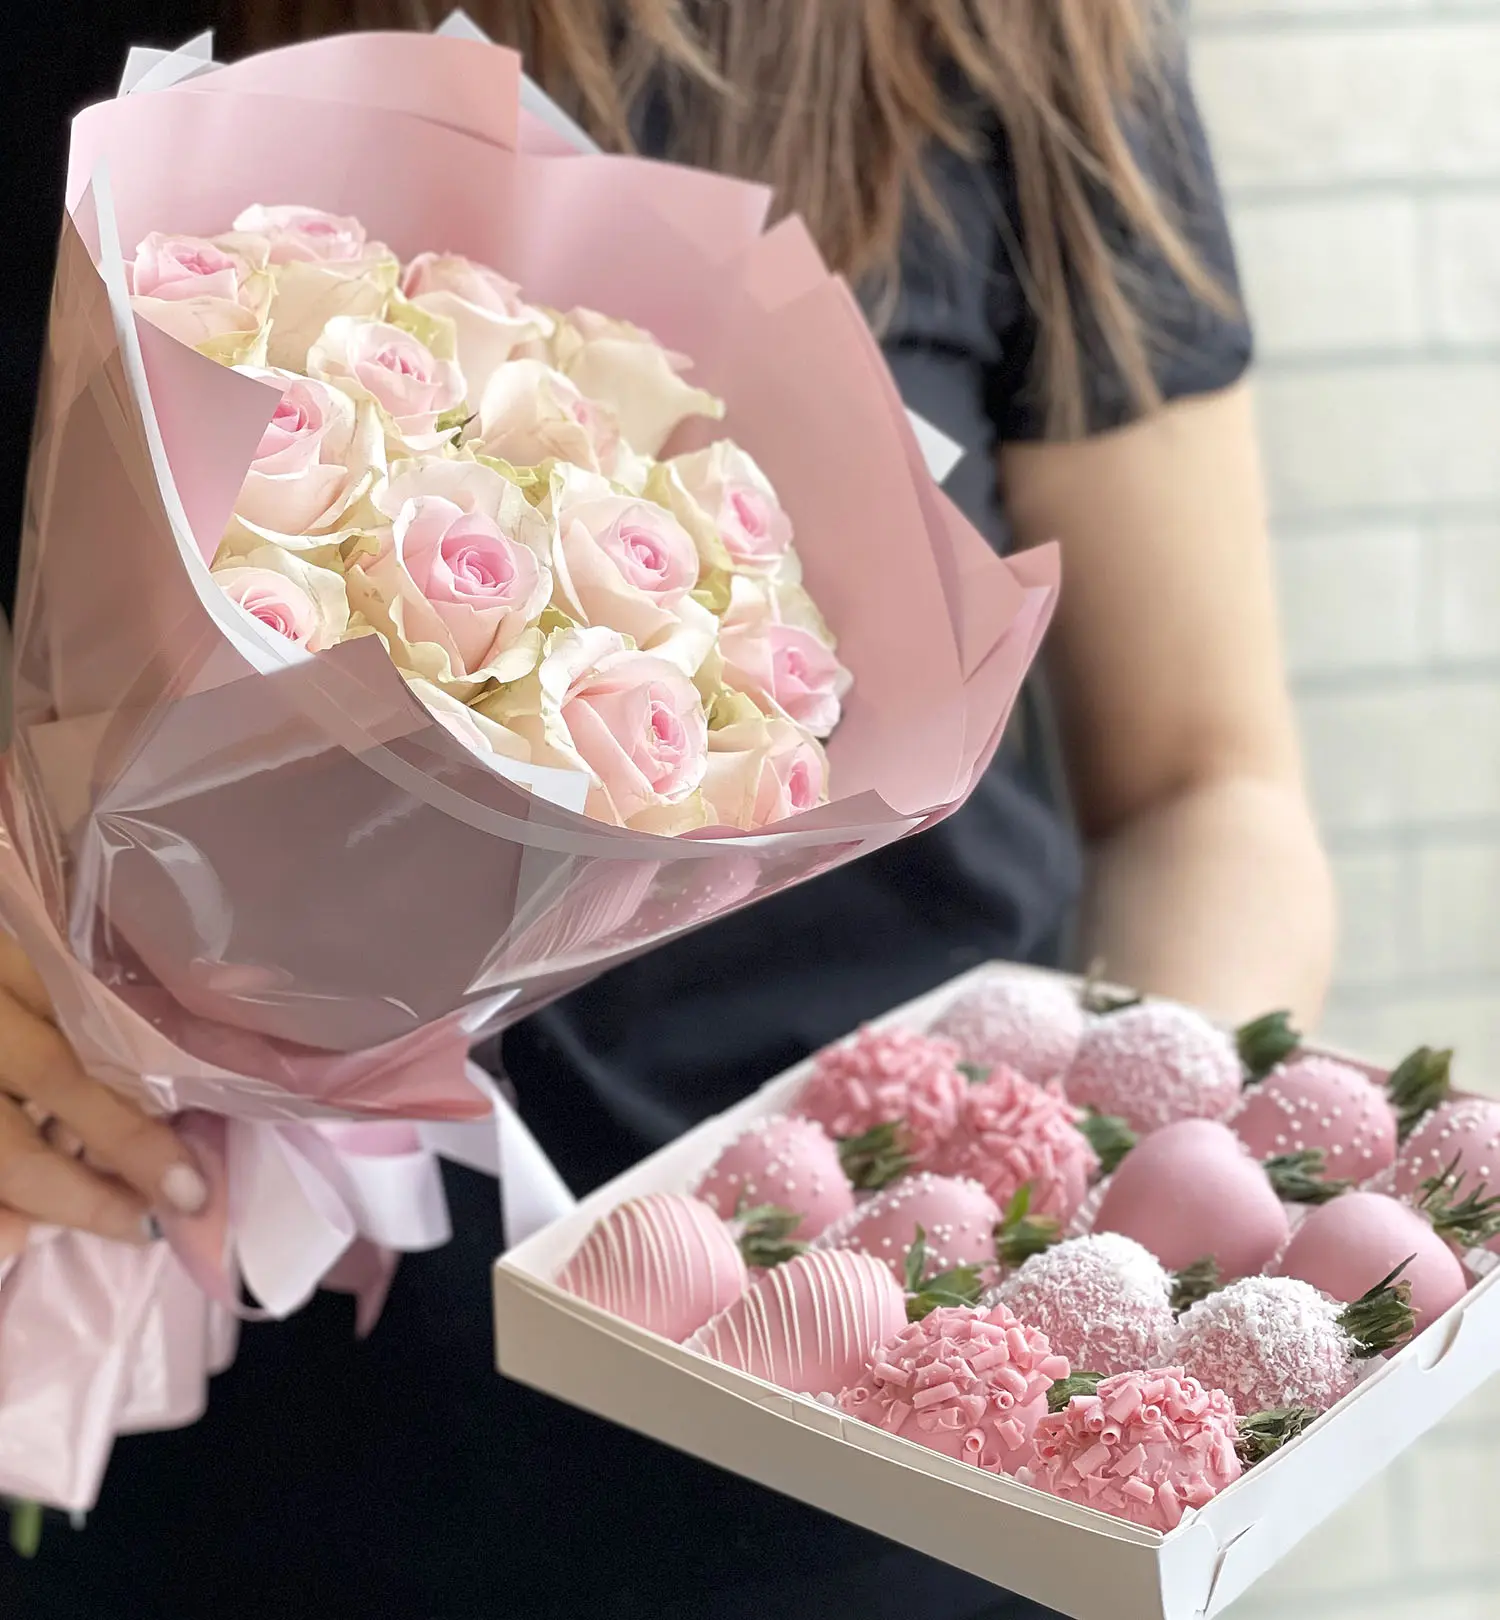 Клубника в розовом шоколаде "Дуо набор с розами" 4 900 руб.